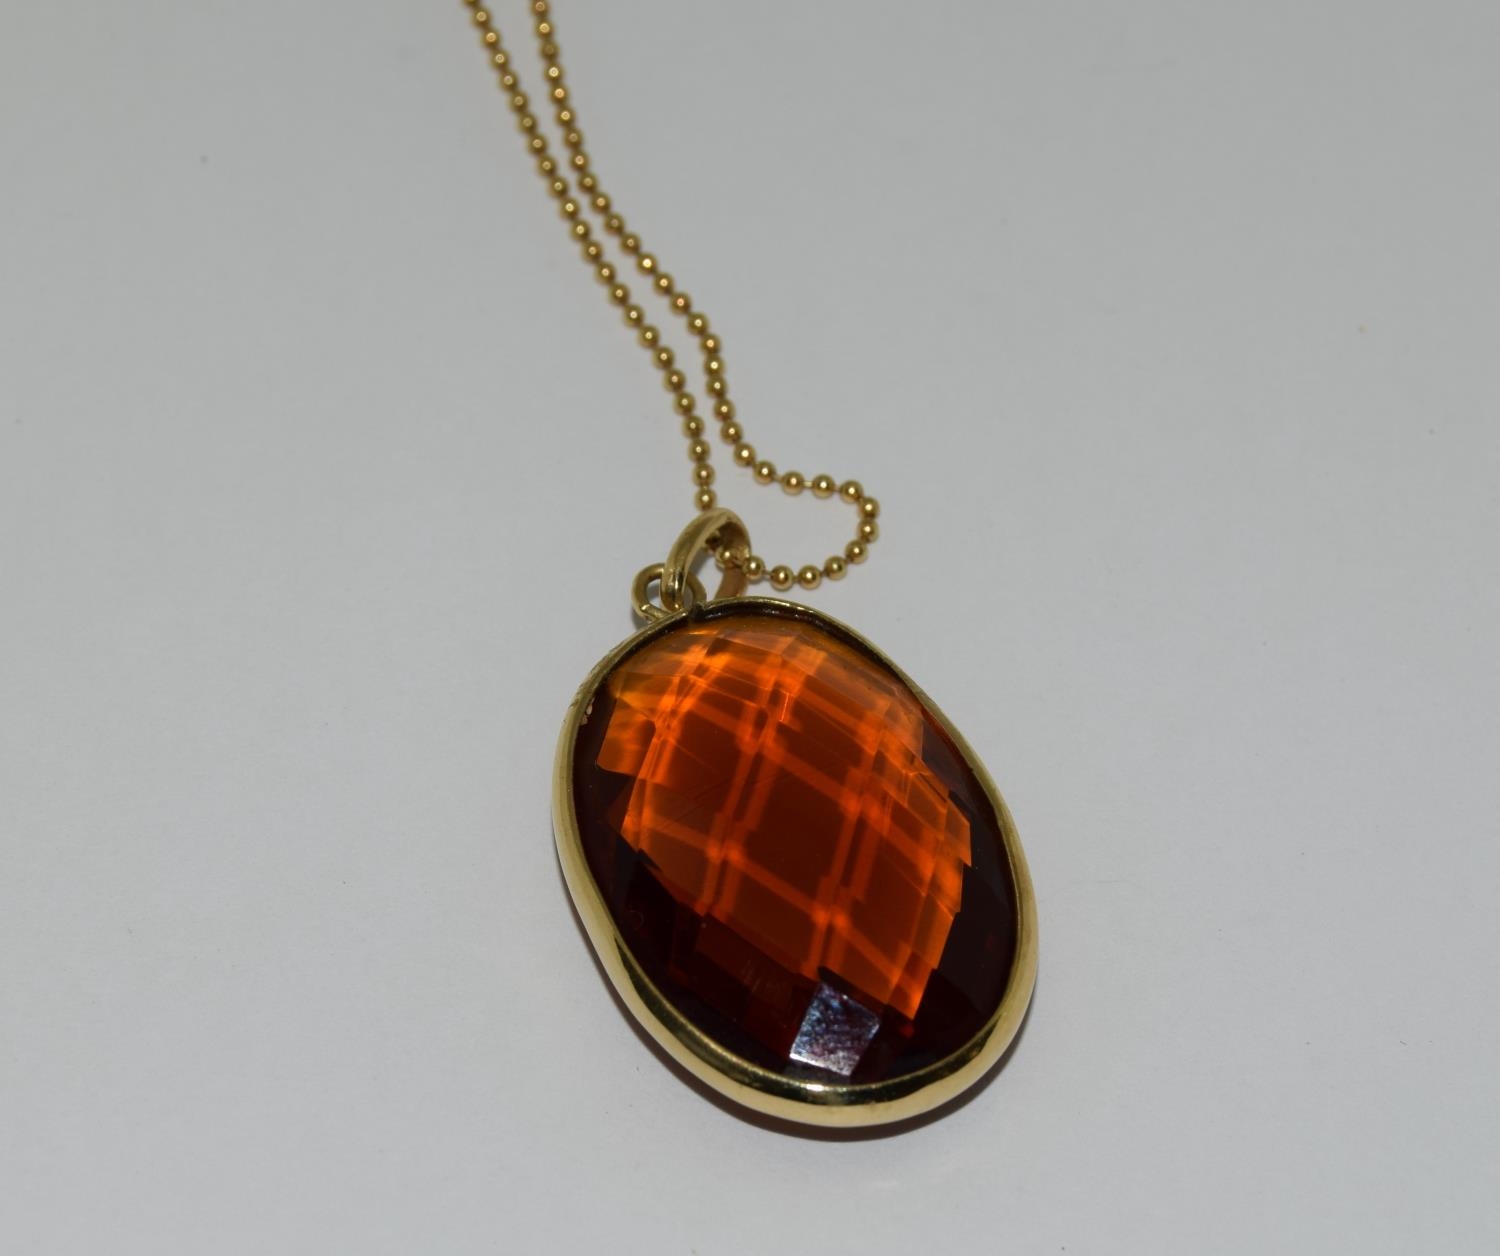 Gold amber quartz pendant necklace.